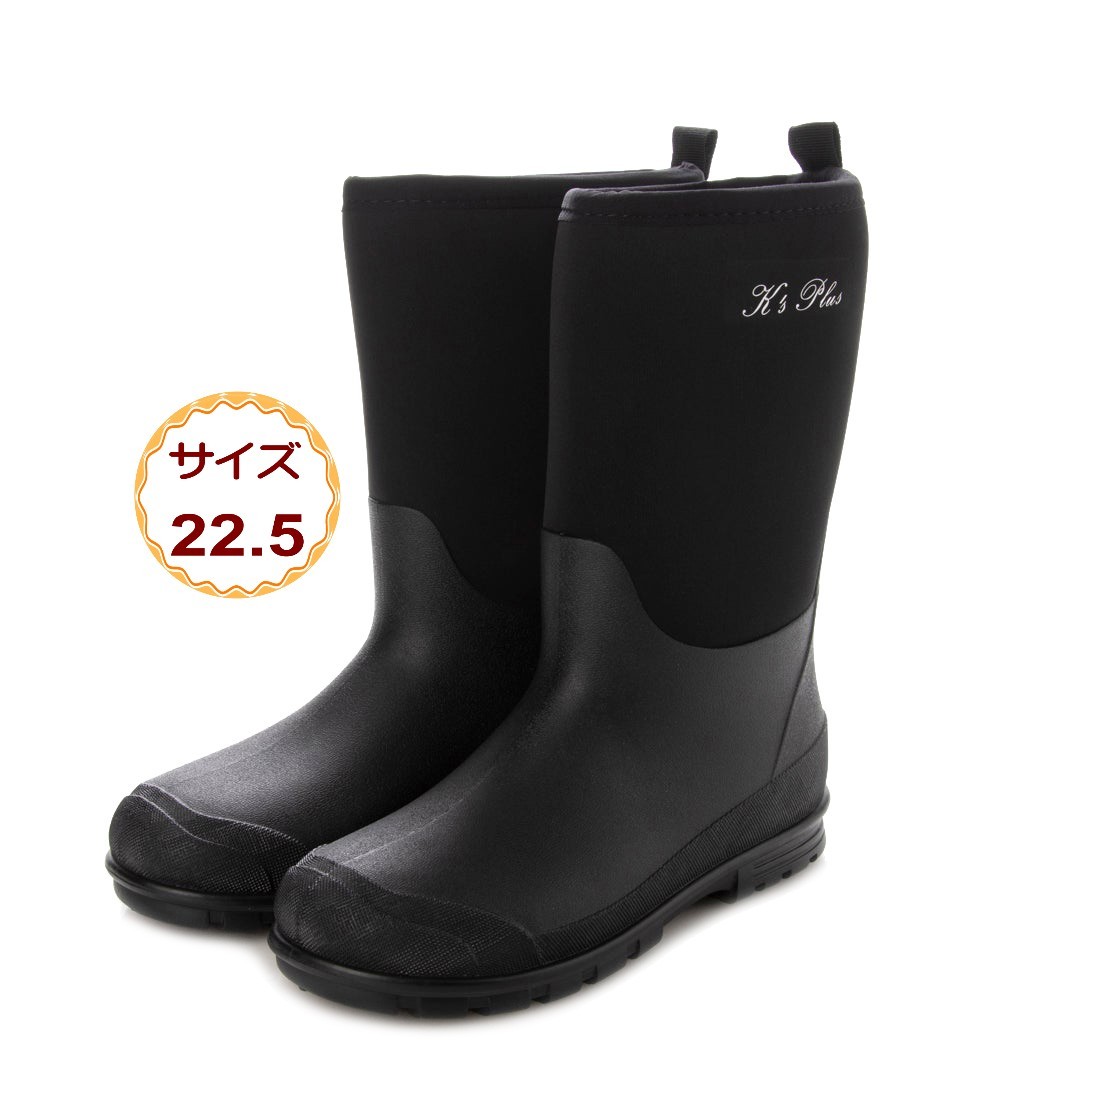  black 22.5cm lady's rain boots rain shoes rain boots boots Neo pre n waterproof 21077-blk-225